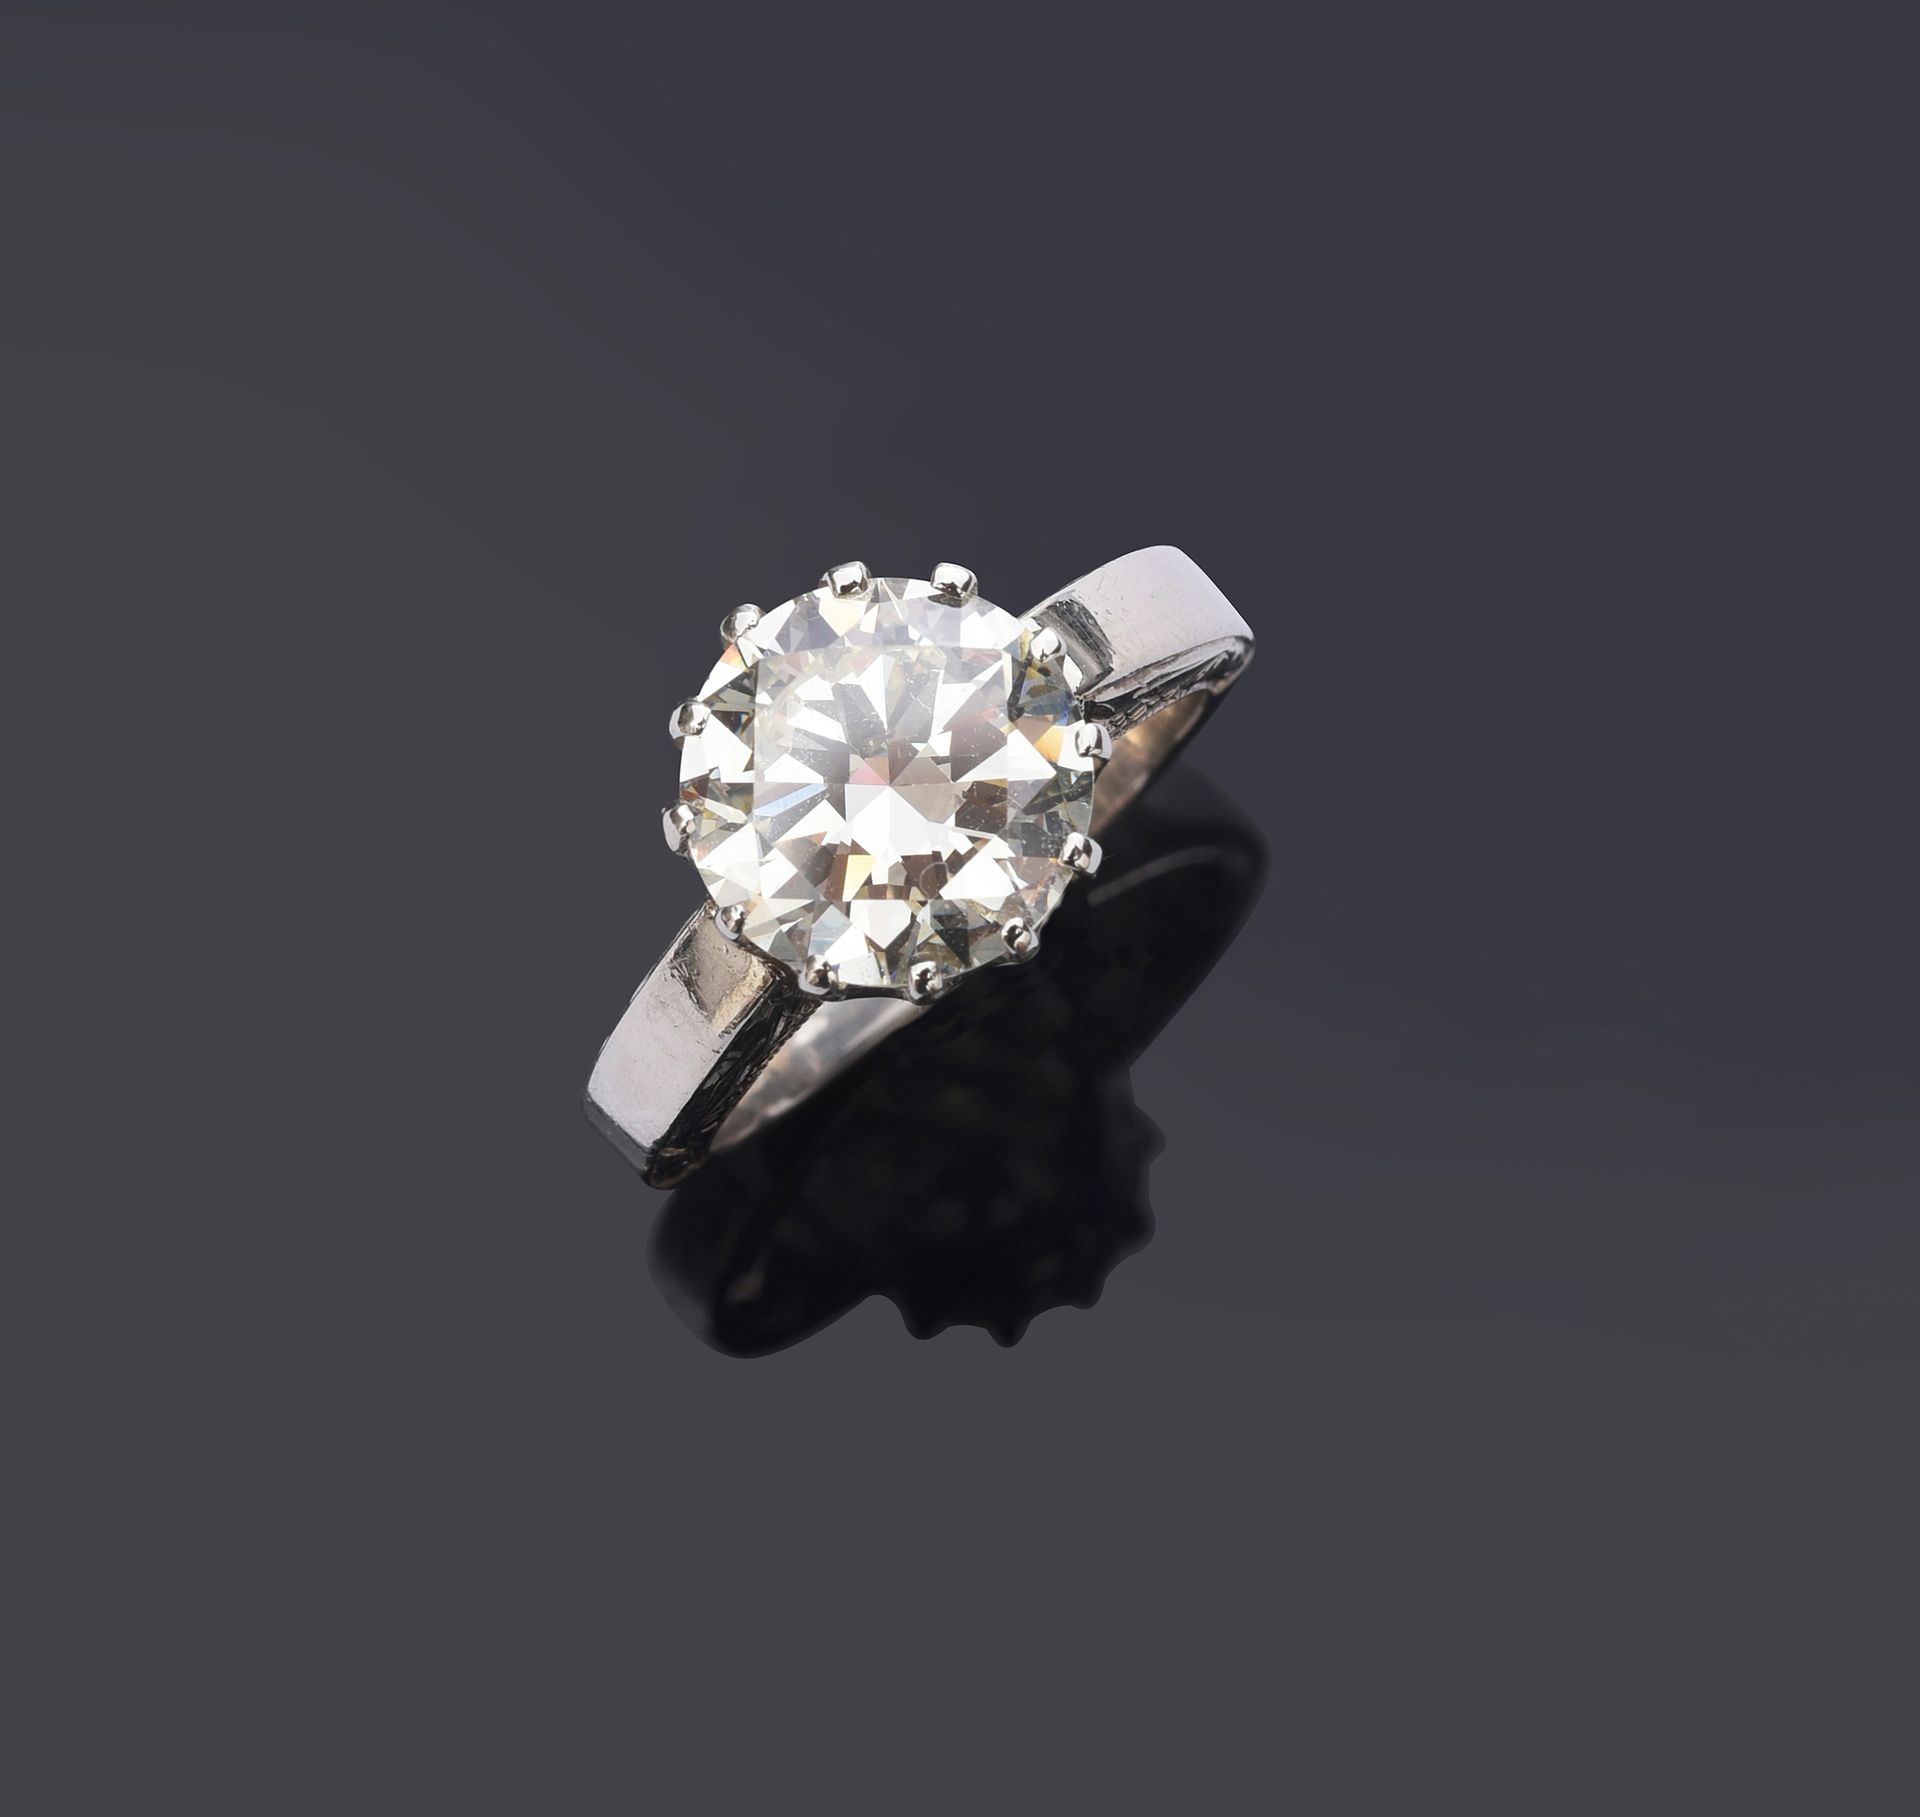 Null 585白金单颗钻石，镶嵌一颗明亮式切割钻石（约4.2克拉，推定为L.VS1），戒指主体精雕细琢。
TDD : 58
毛重 : 7.6 g